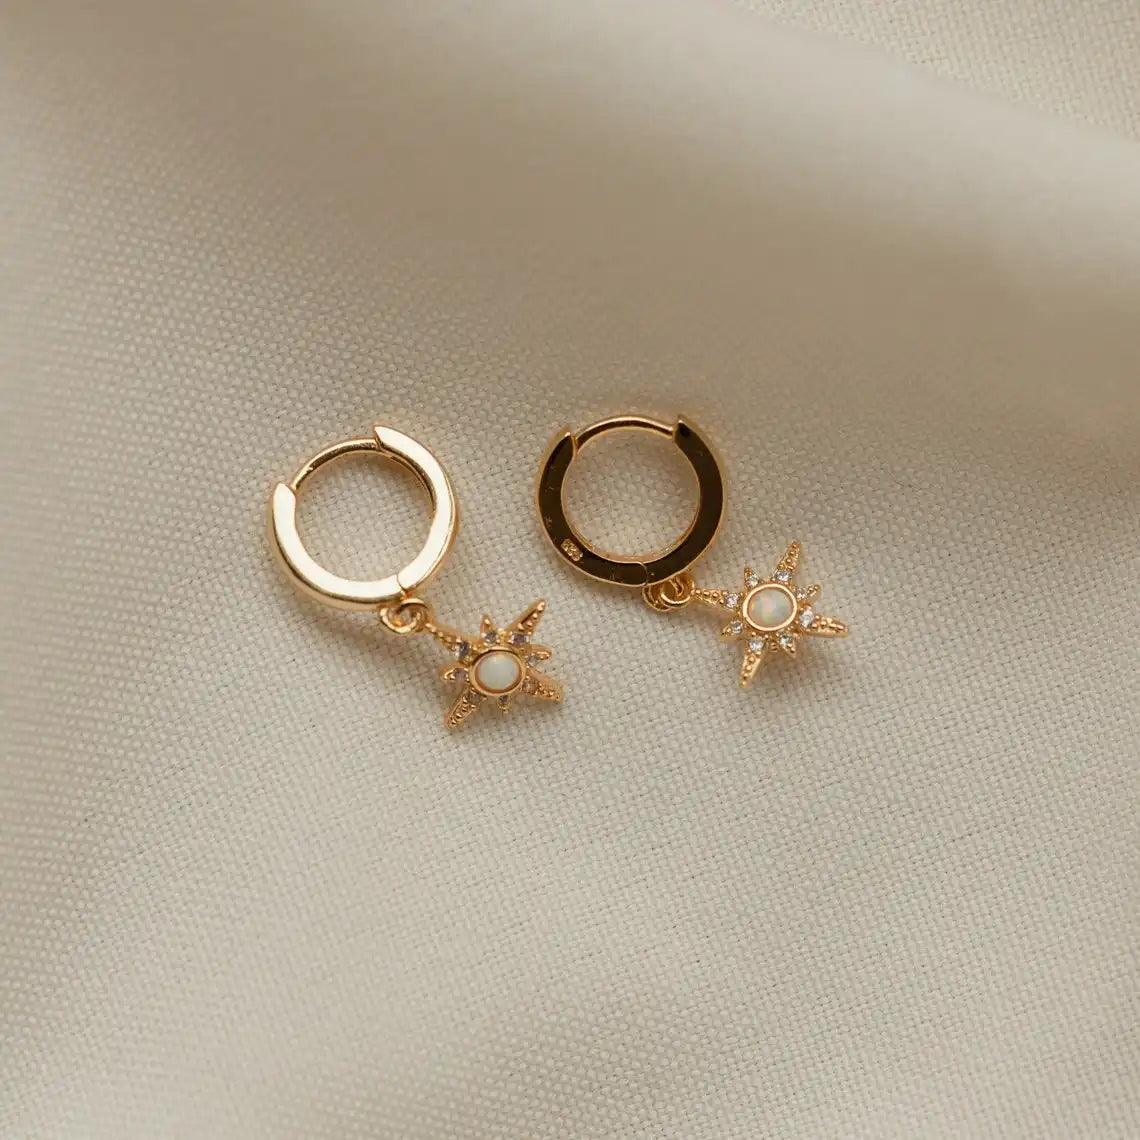 Starburst Huggie Earrings by Porthomall • Trending Opal Star Earrings • Perfect Minimalist Look • Gift for Her